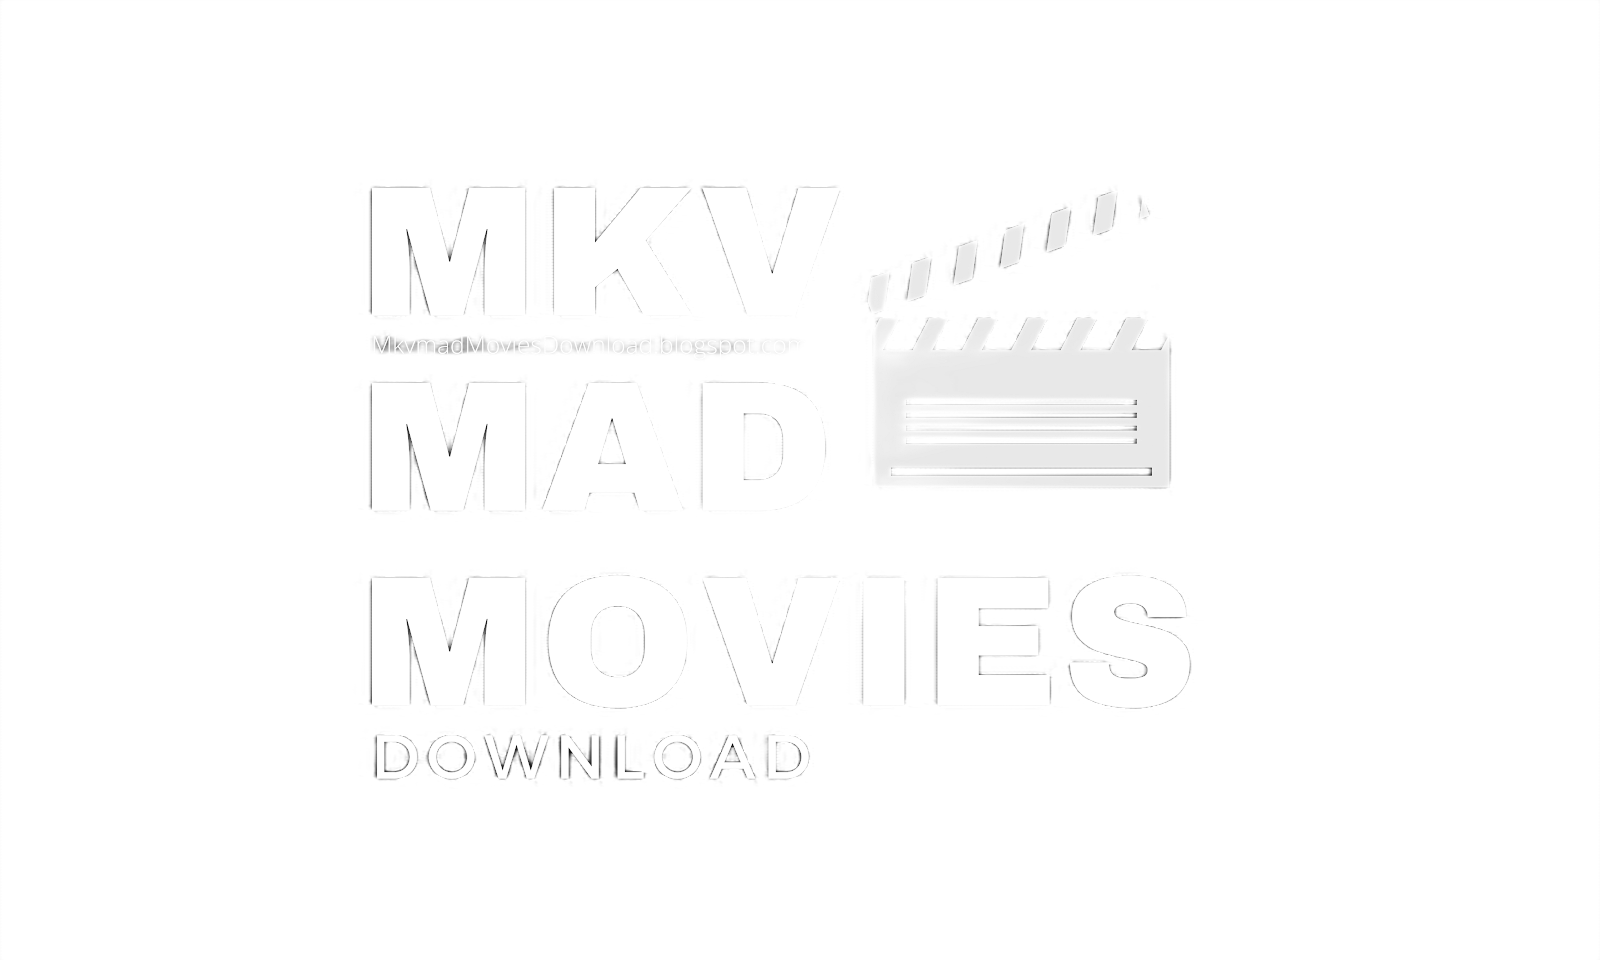  MkvMad.blogspot.Com - Free HD 720p to 1080p Mkv Movies Download